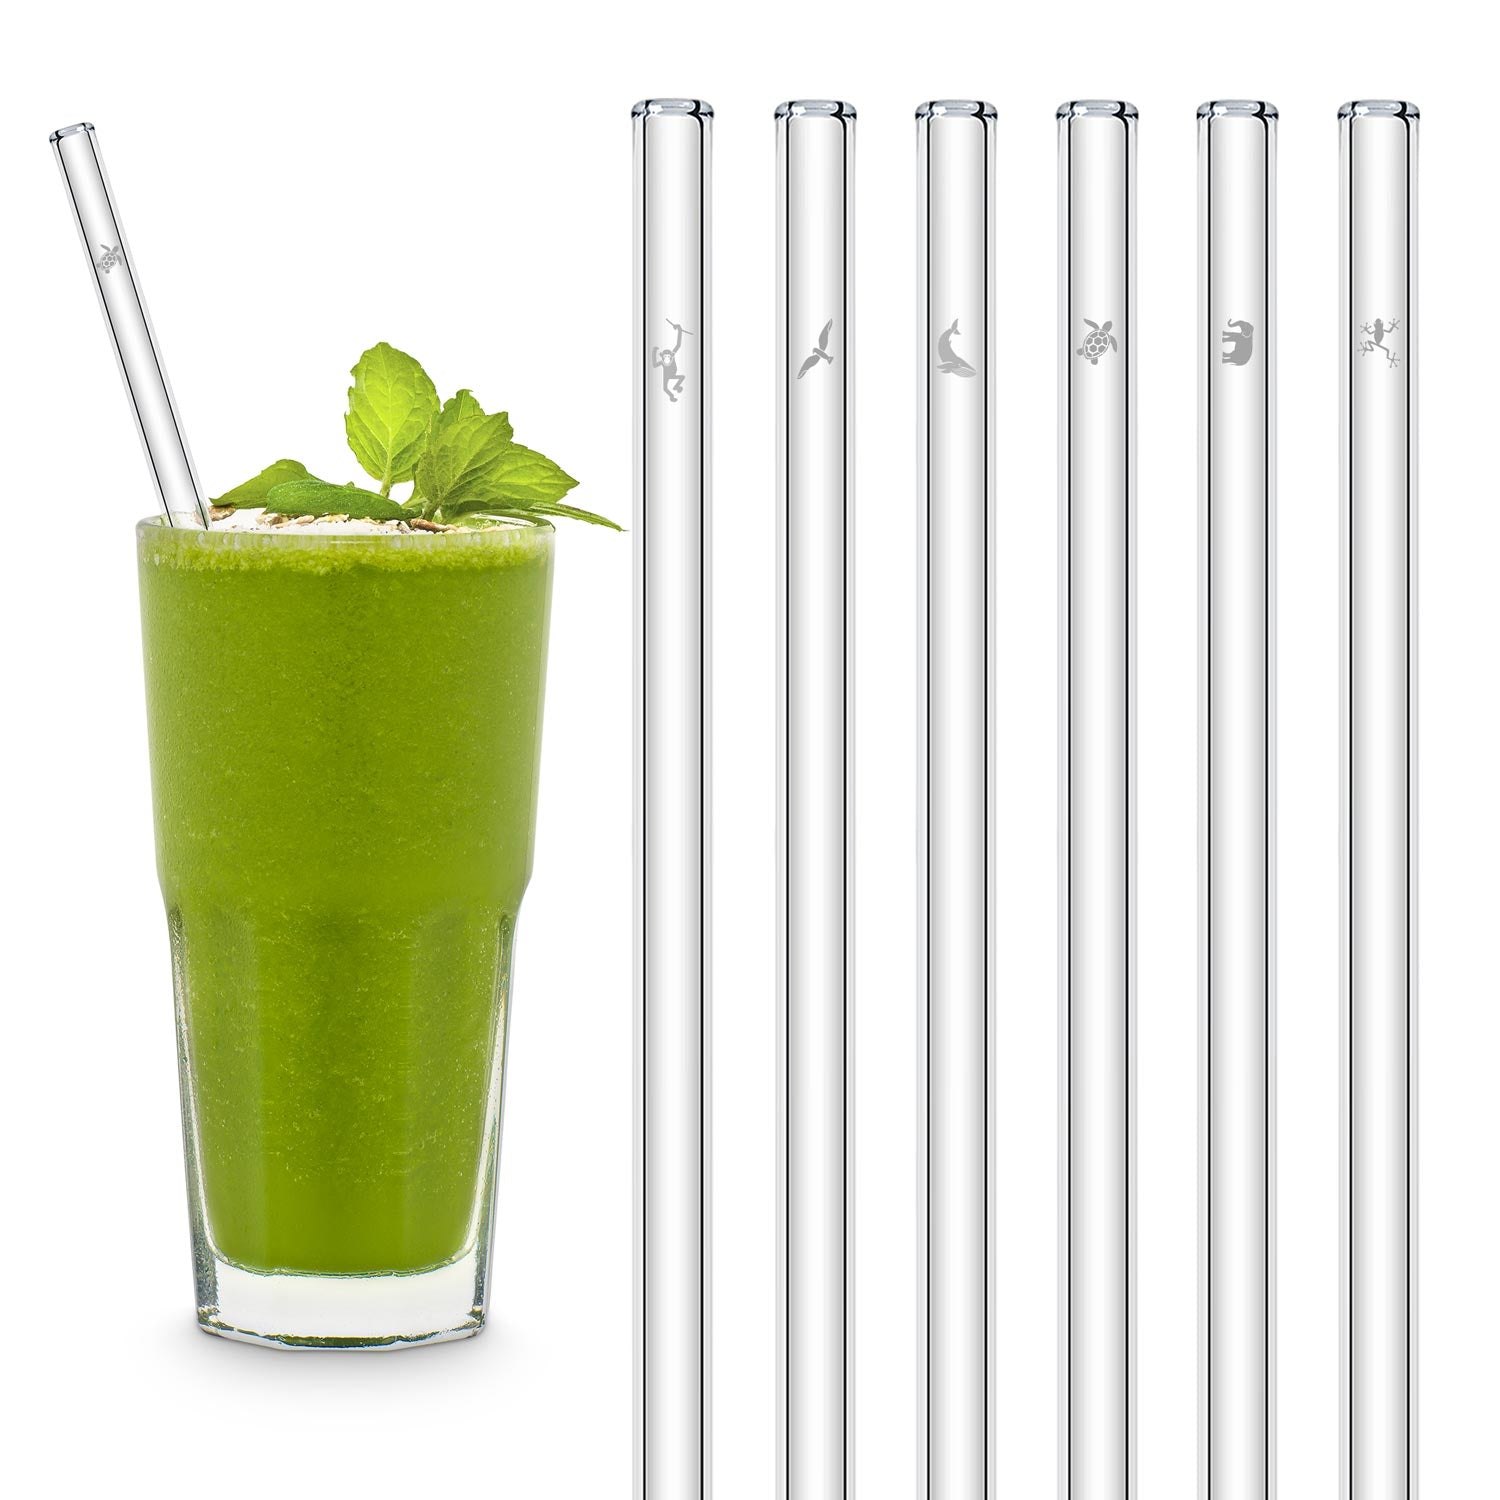 FROG On Green GLASS STRAW - Reusable Straws, Glass Straws